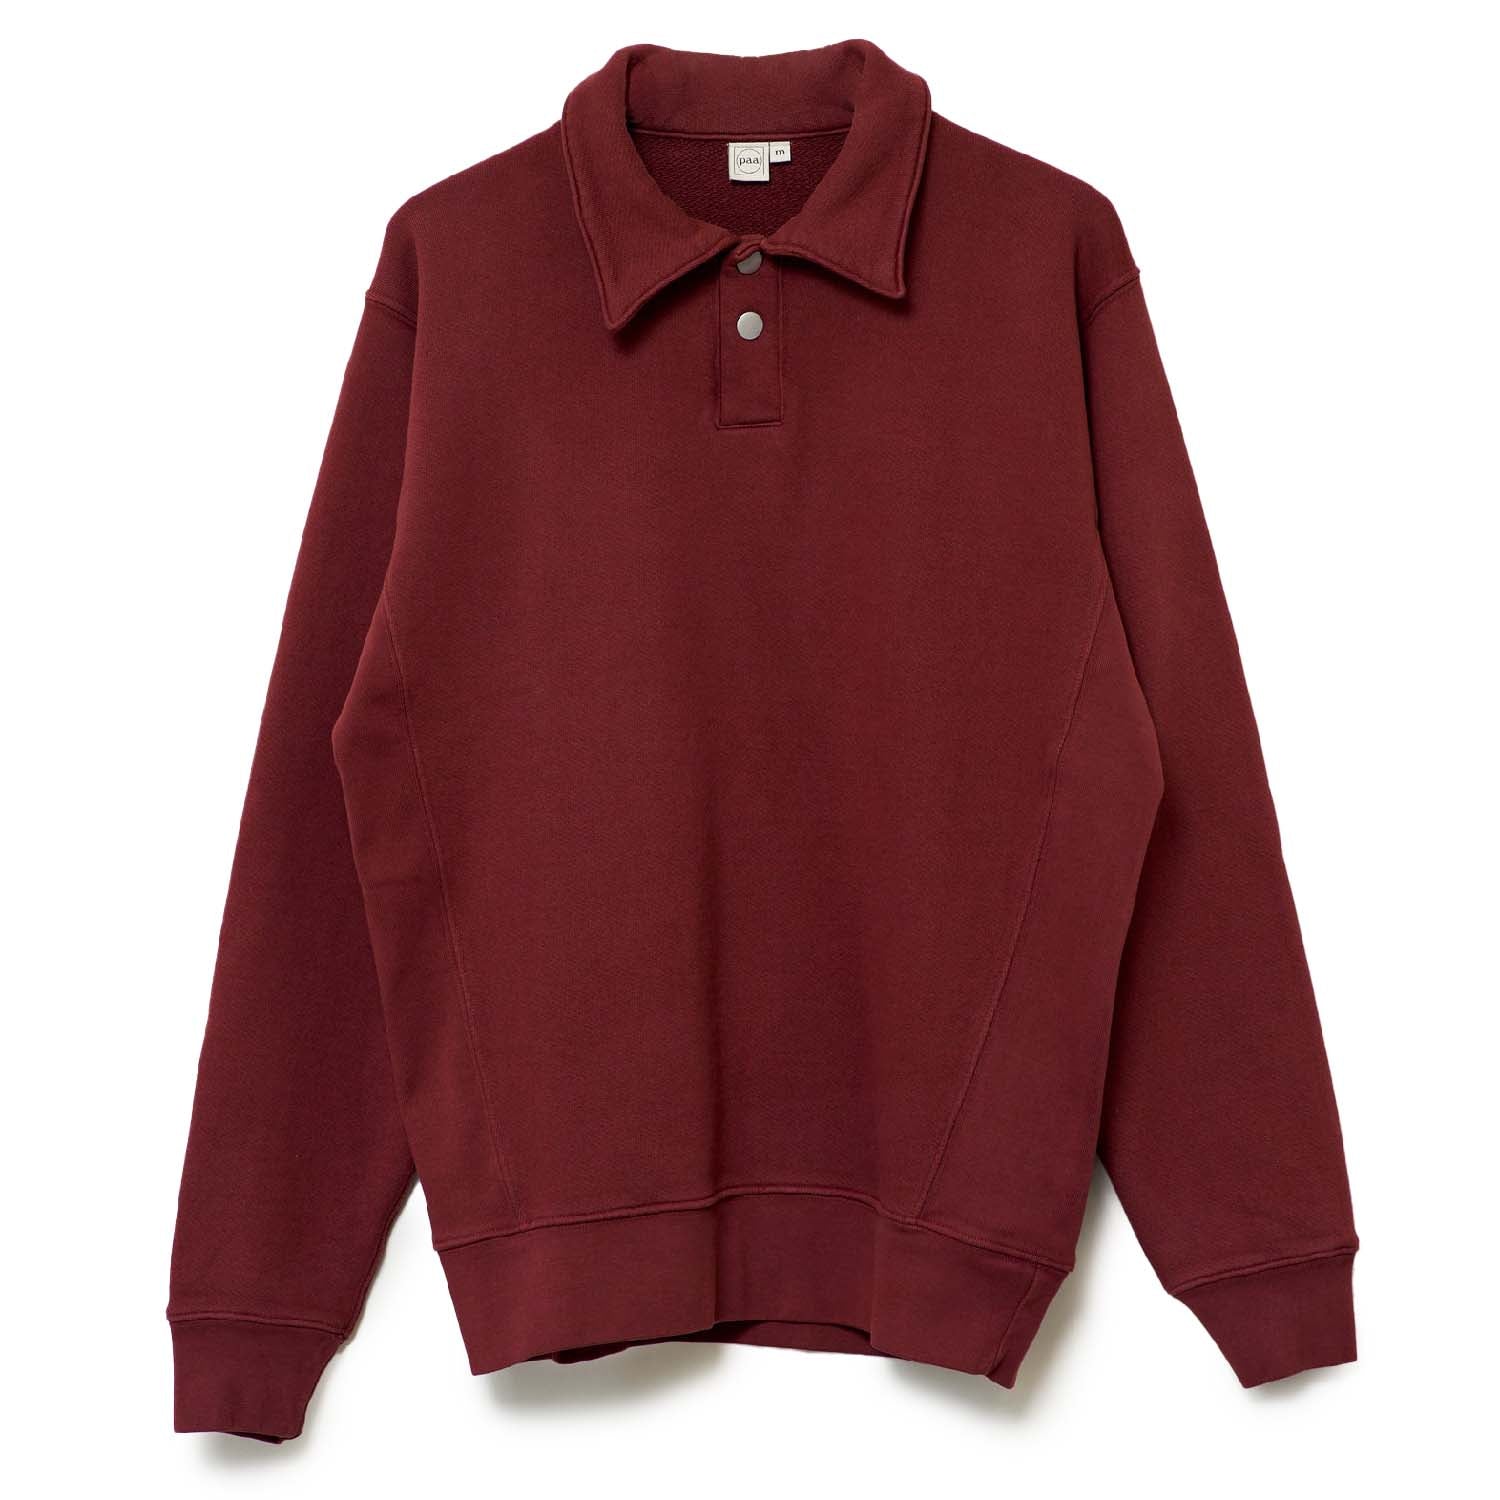 Paa - Paa - Long Sleeve Polo Sweatshirt 2 - Cordovan